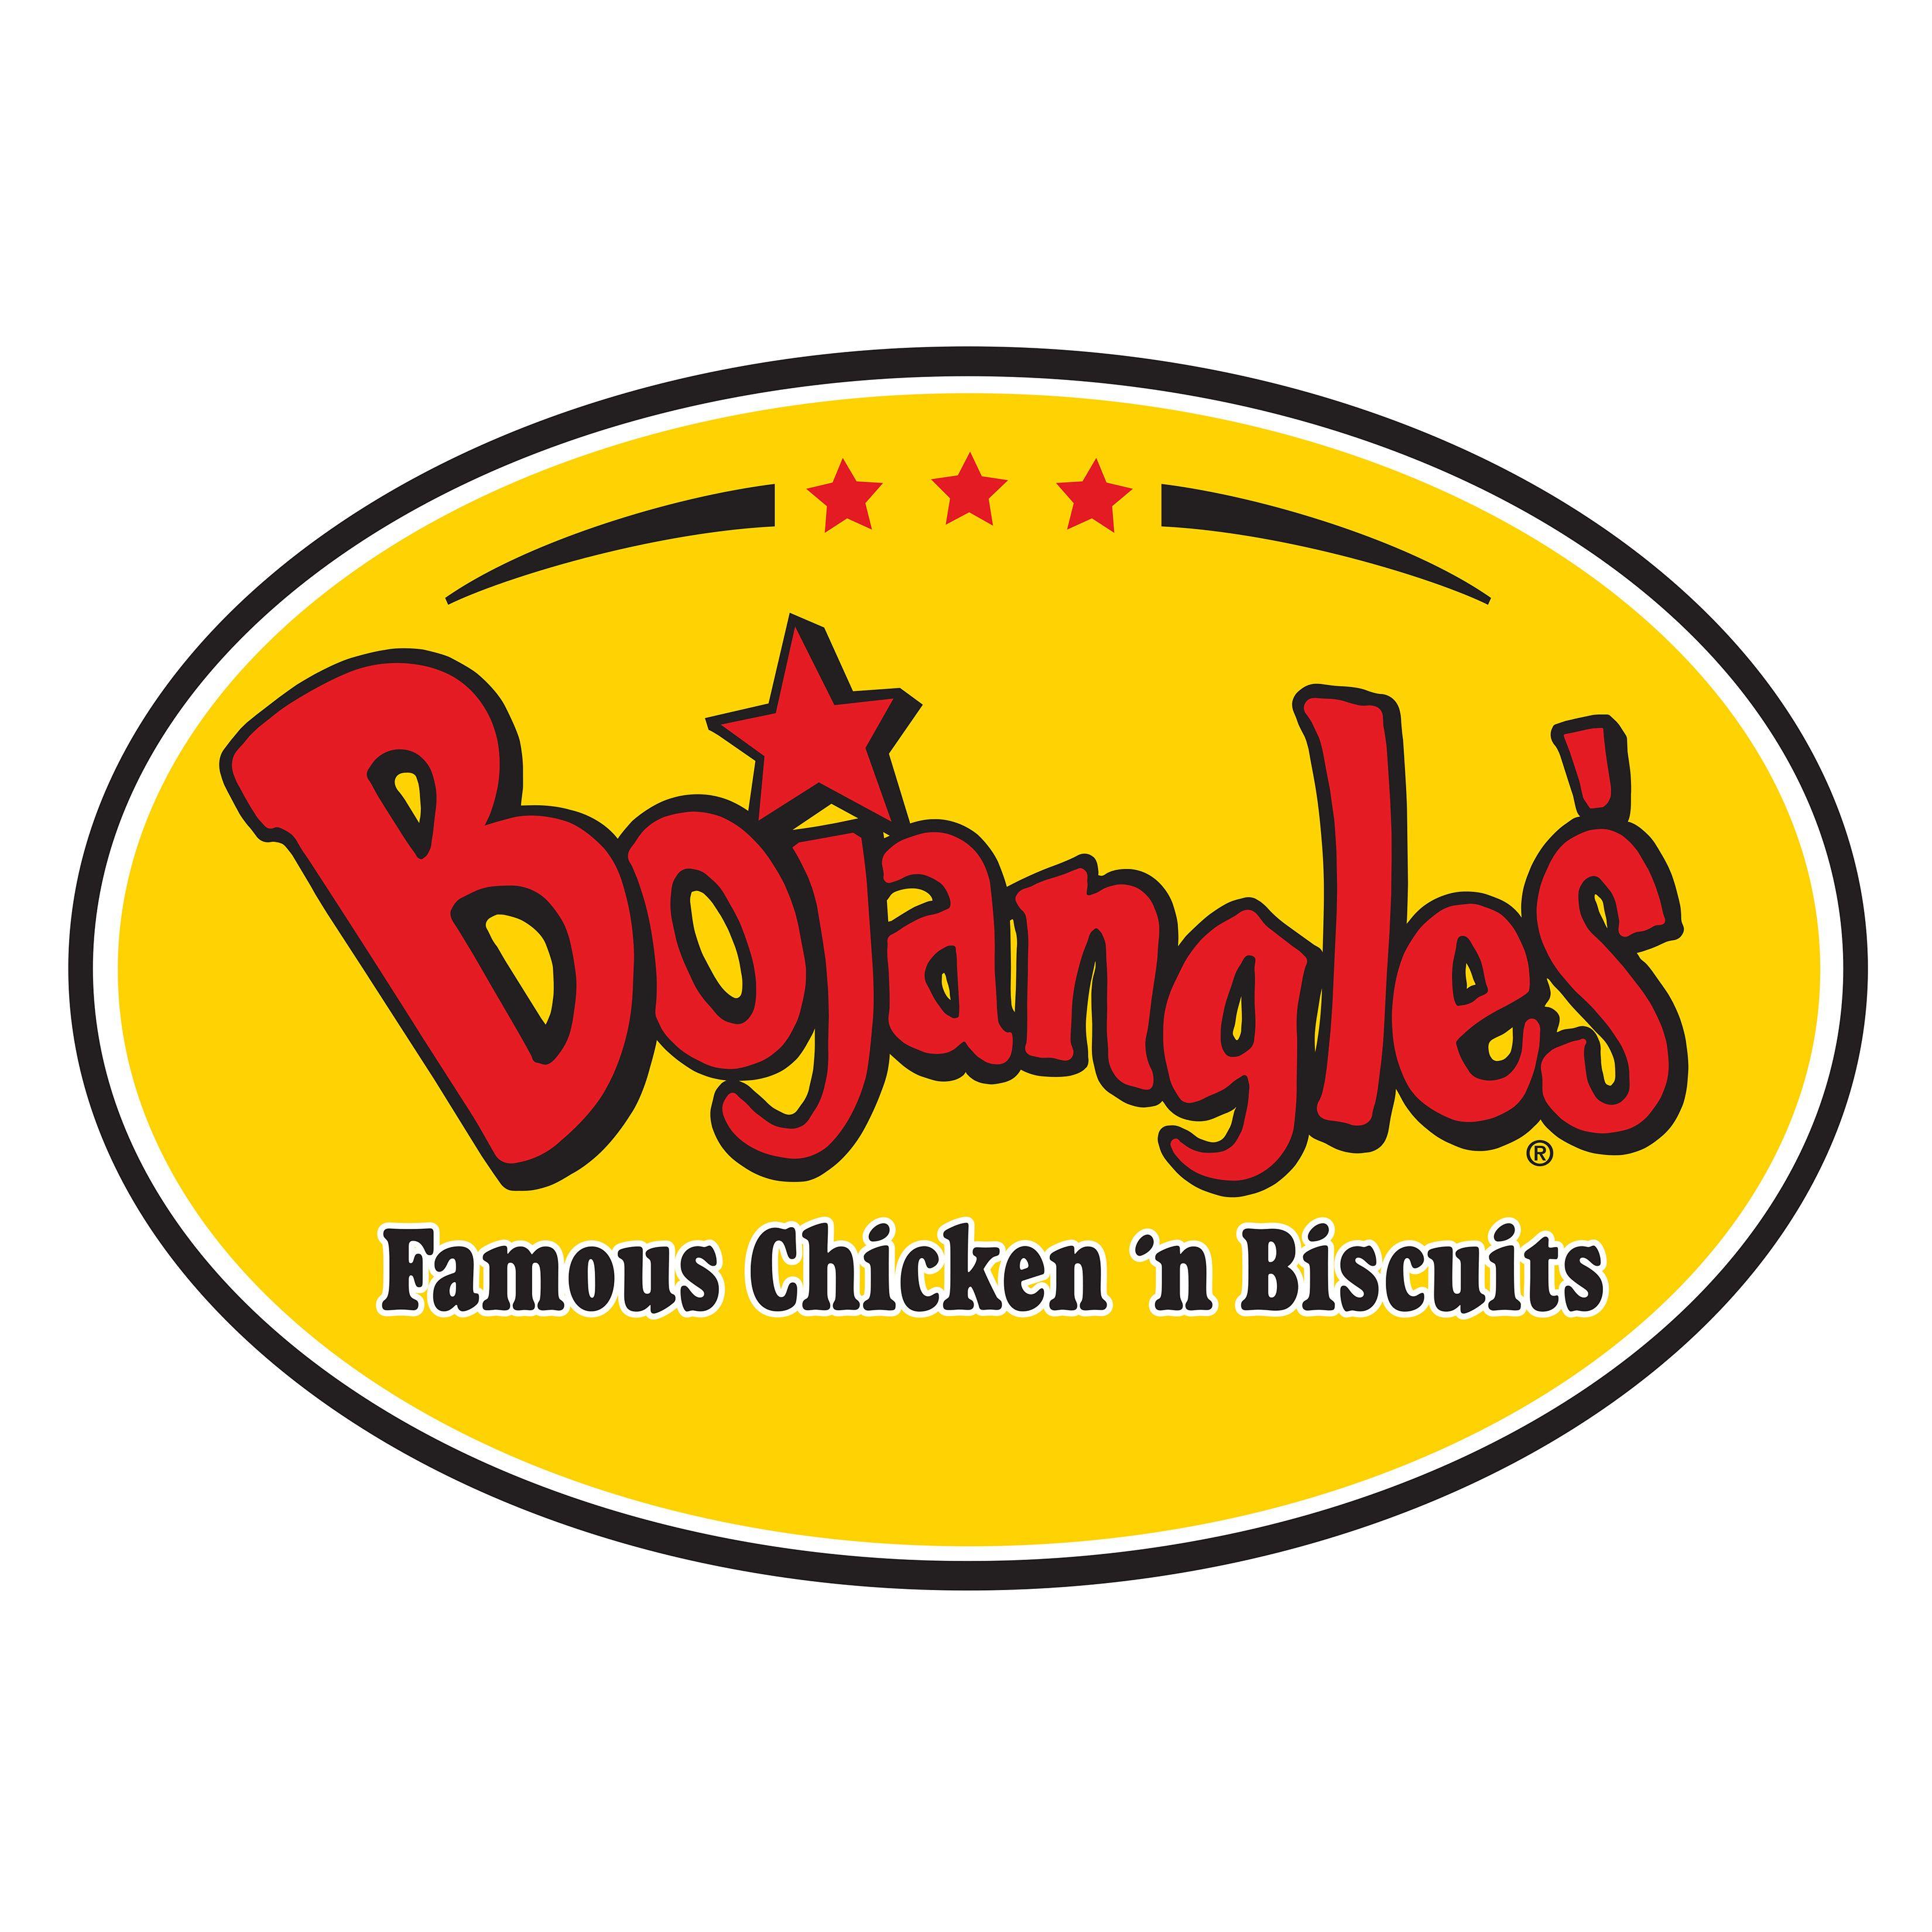 Terrell Red and Yellow Restaurant Logo - Bojangles' at 1183 Franklin Gateway SE in Marietta, GA. Famous